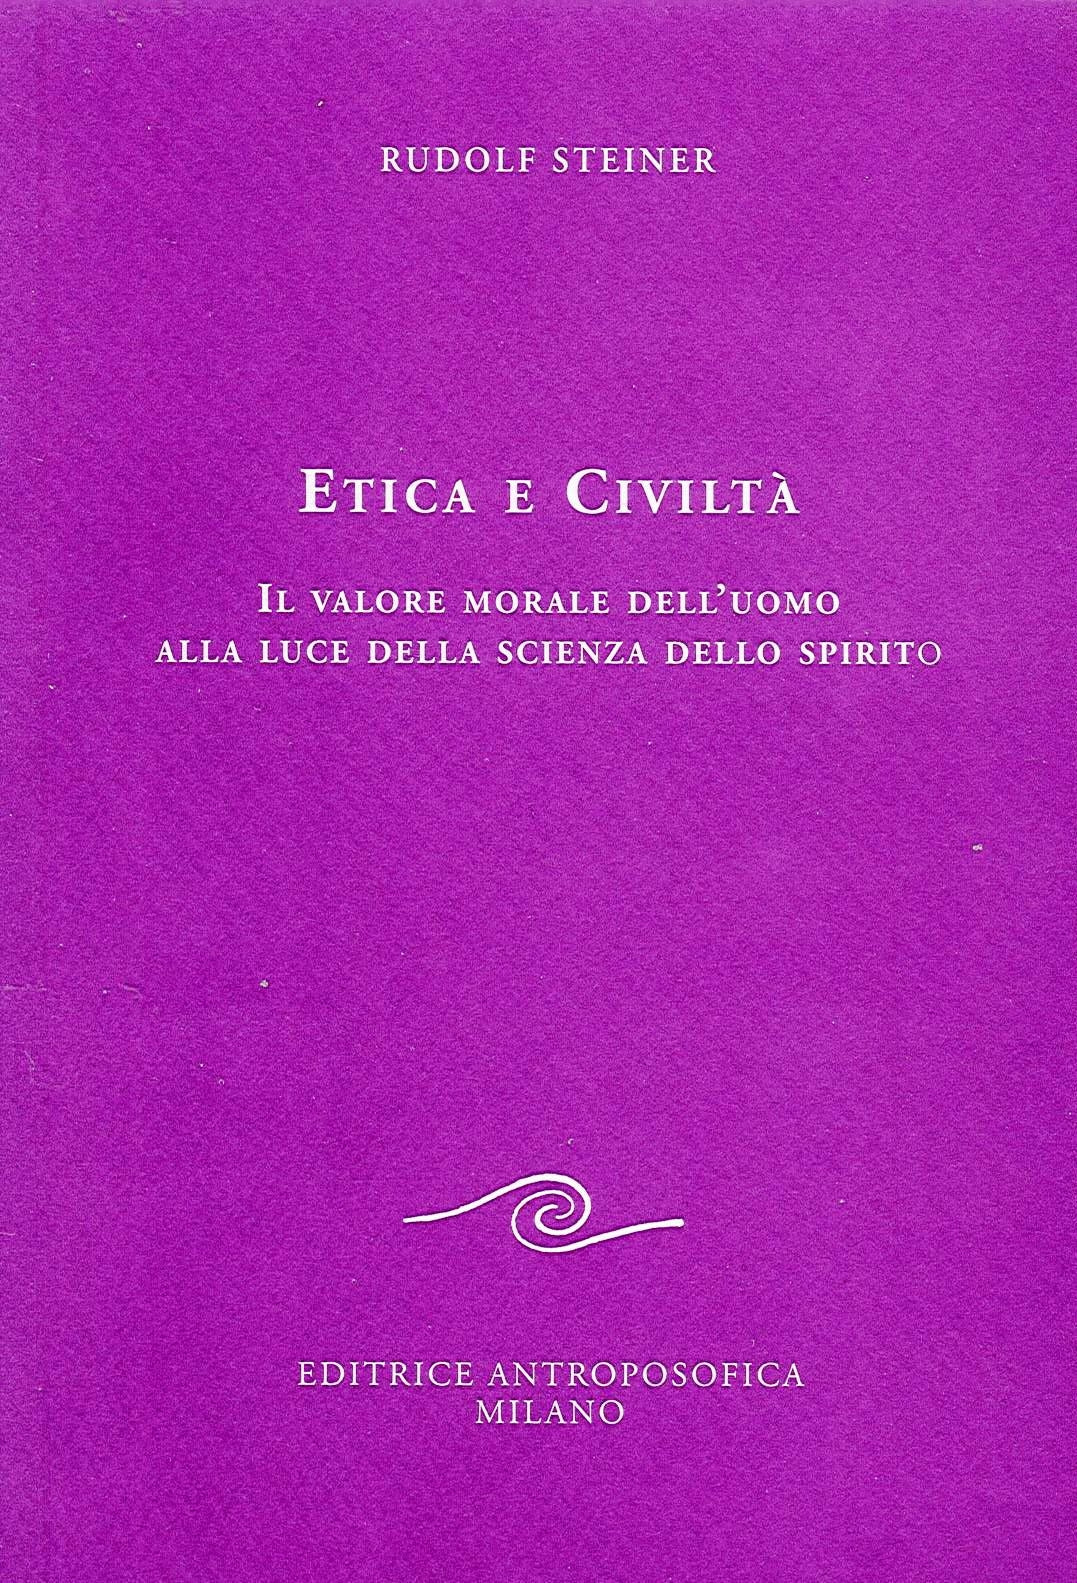 334 - ETICA E CIVILTA' - Rudolf Steiner